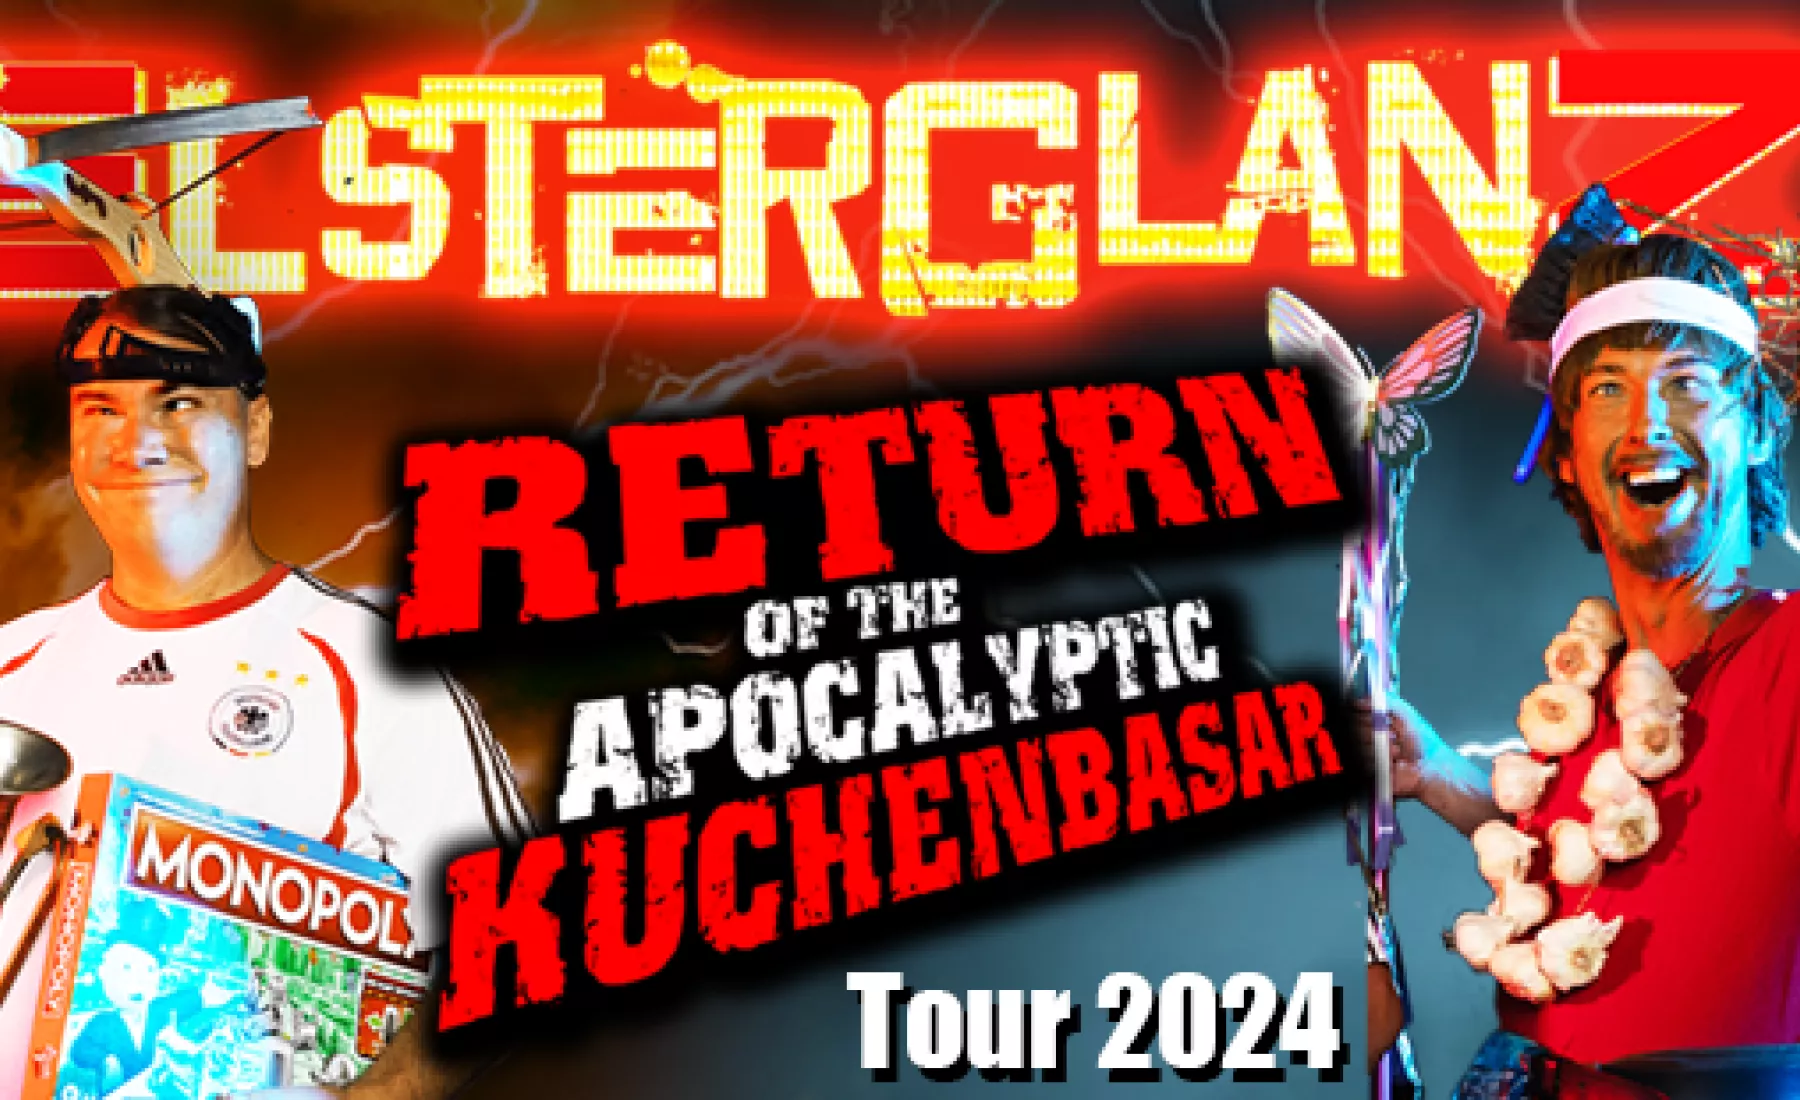 elsterglanz tour 2023 tickets